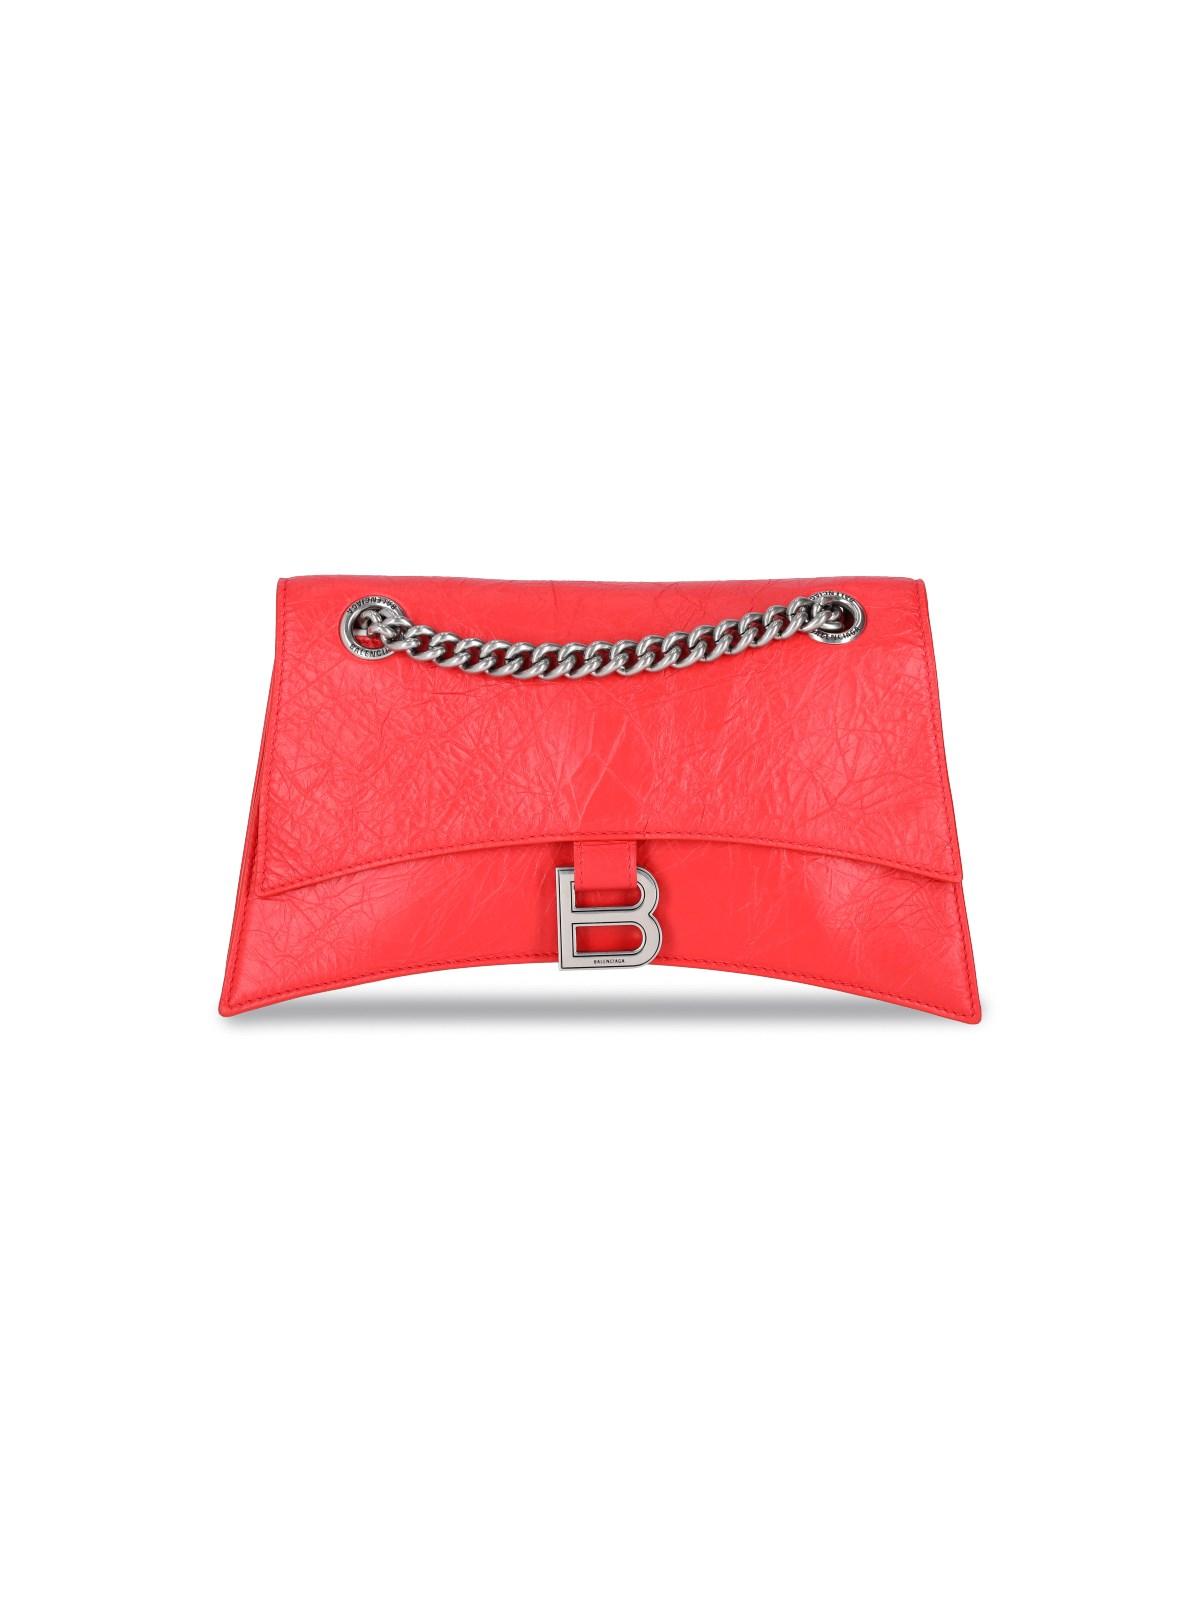 Balenciaga "crush" Small Bag in Red | Lyst